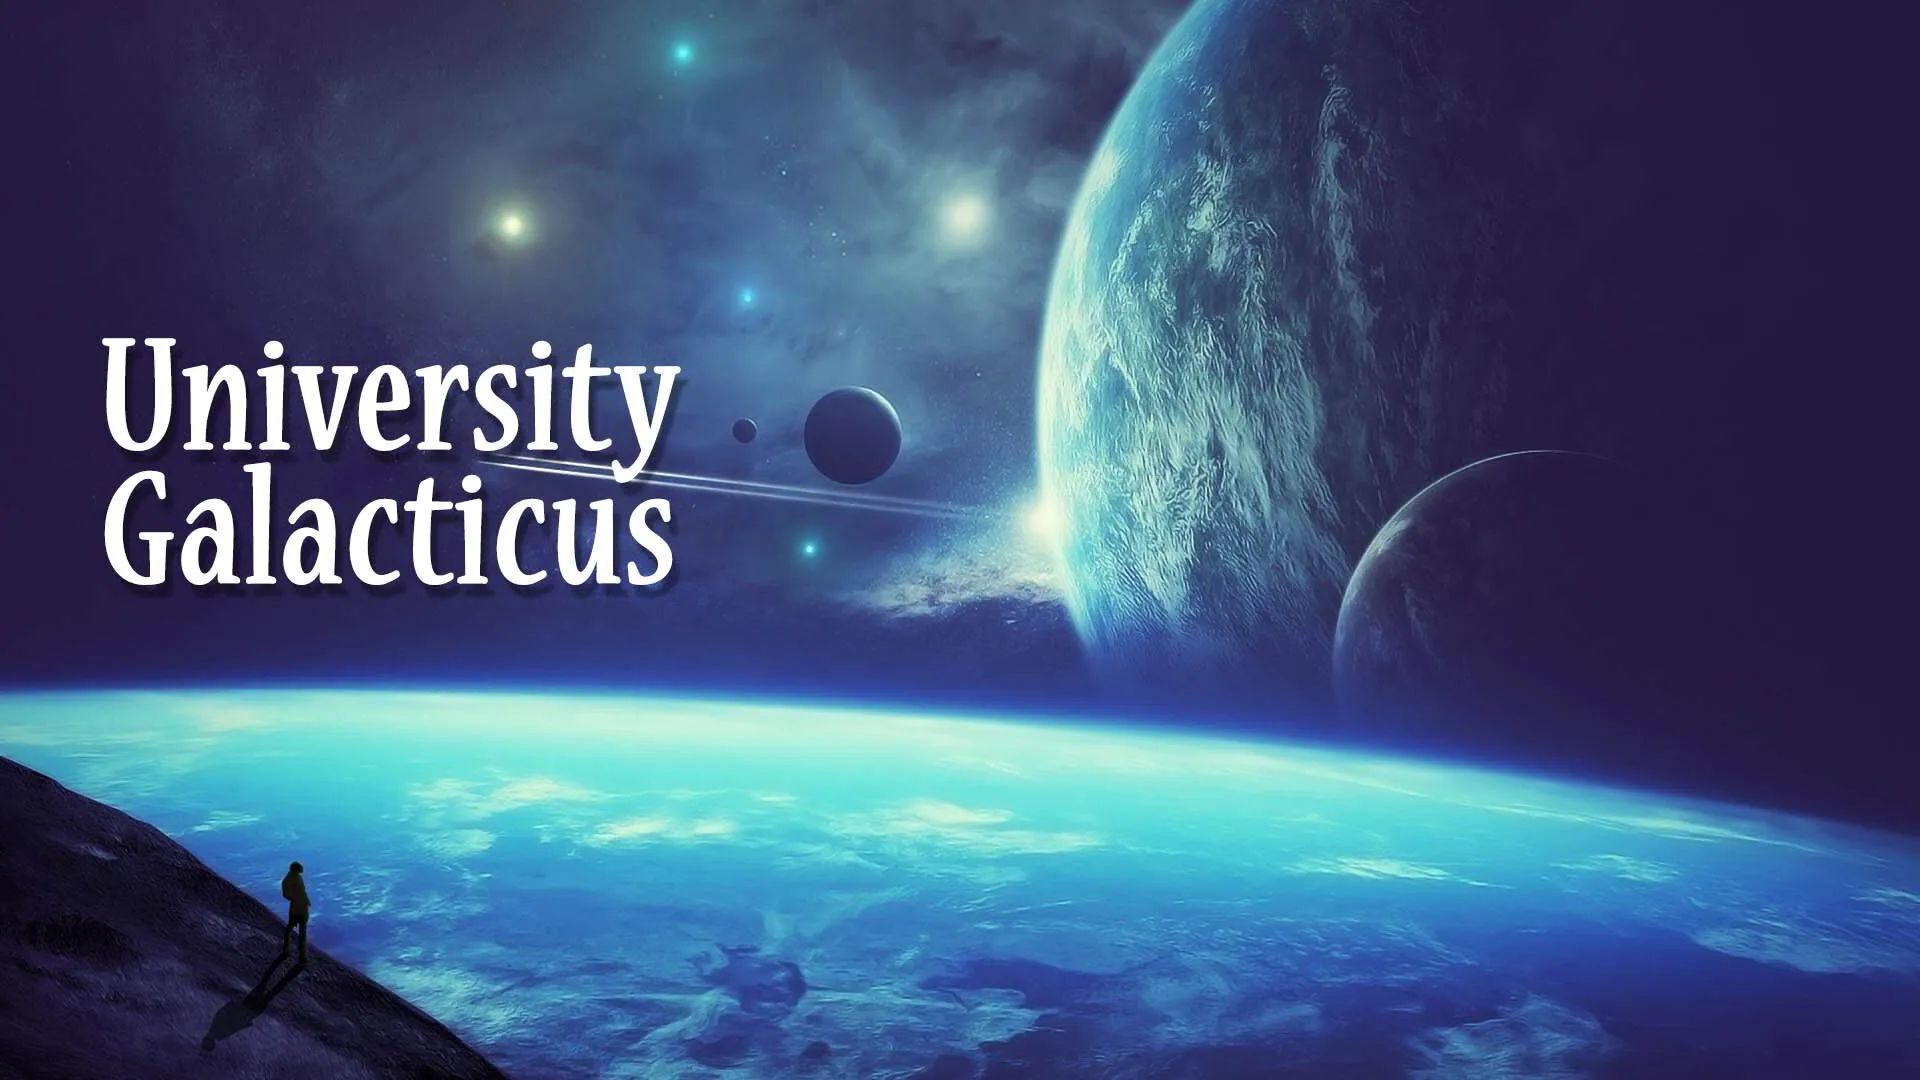 University Galacticus